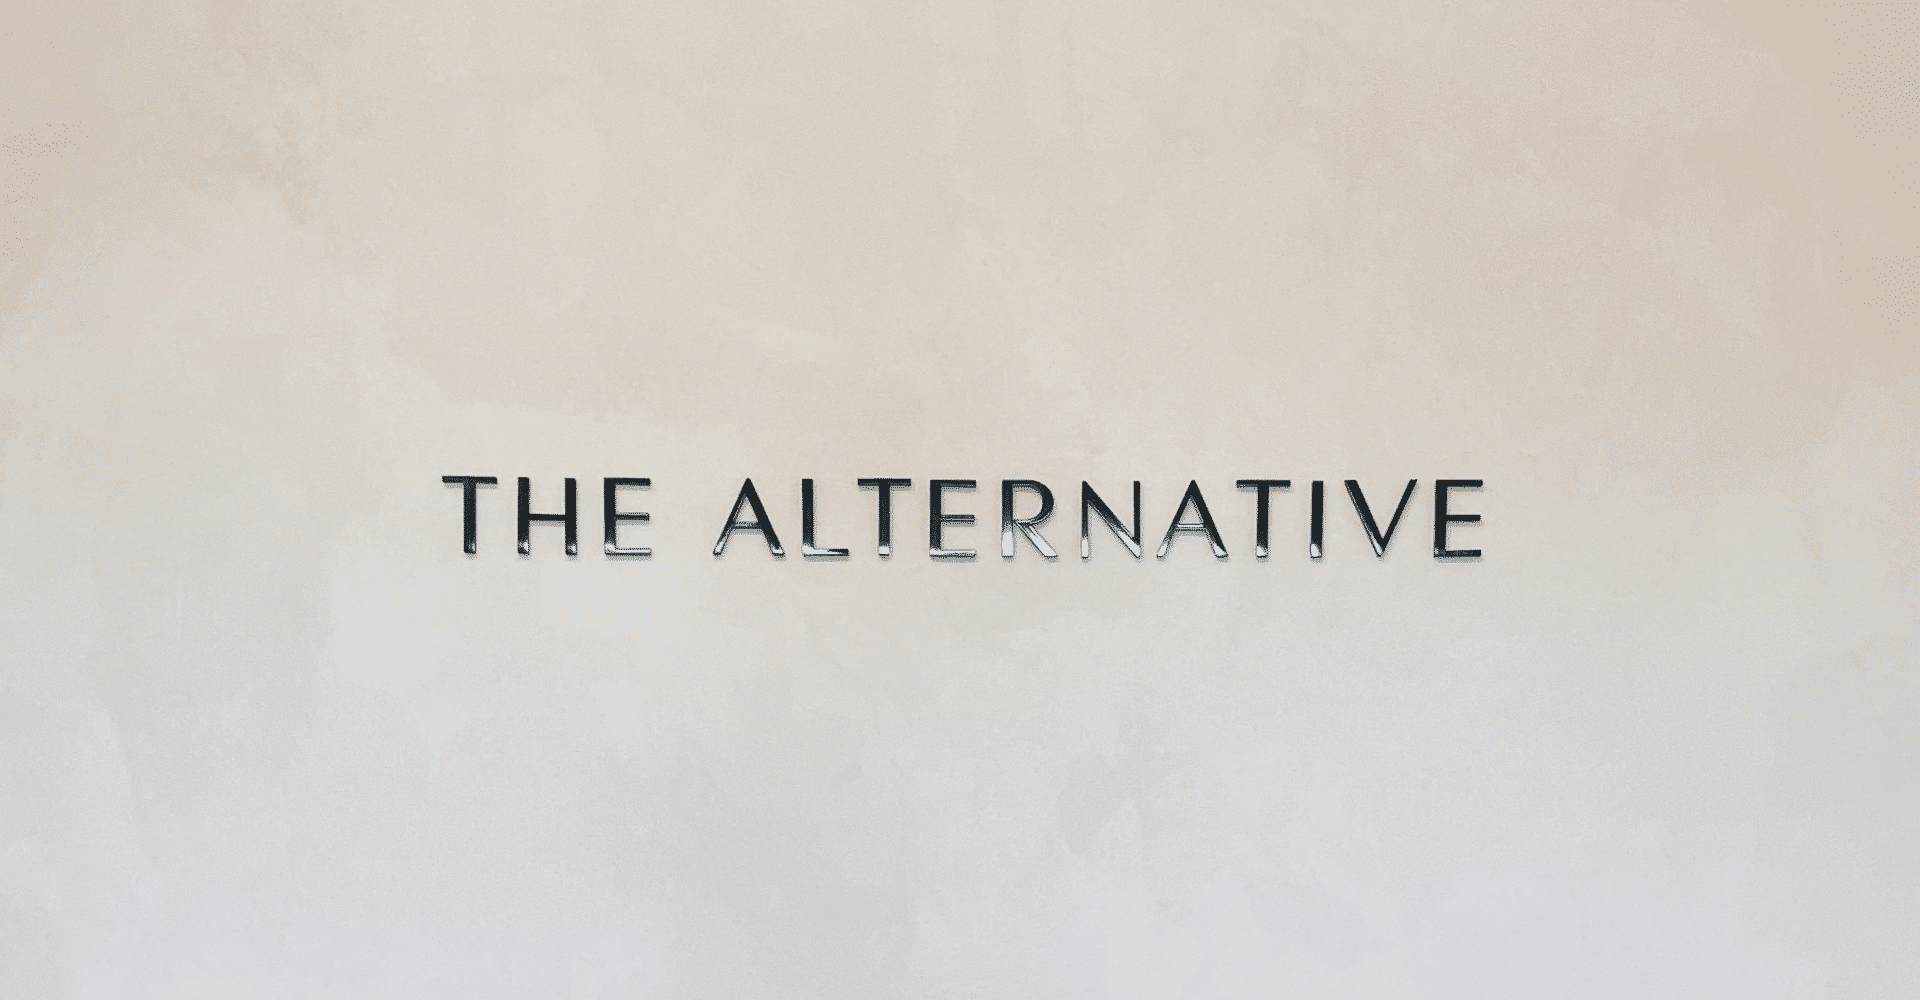 The Alternative signage